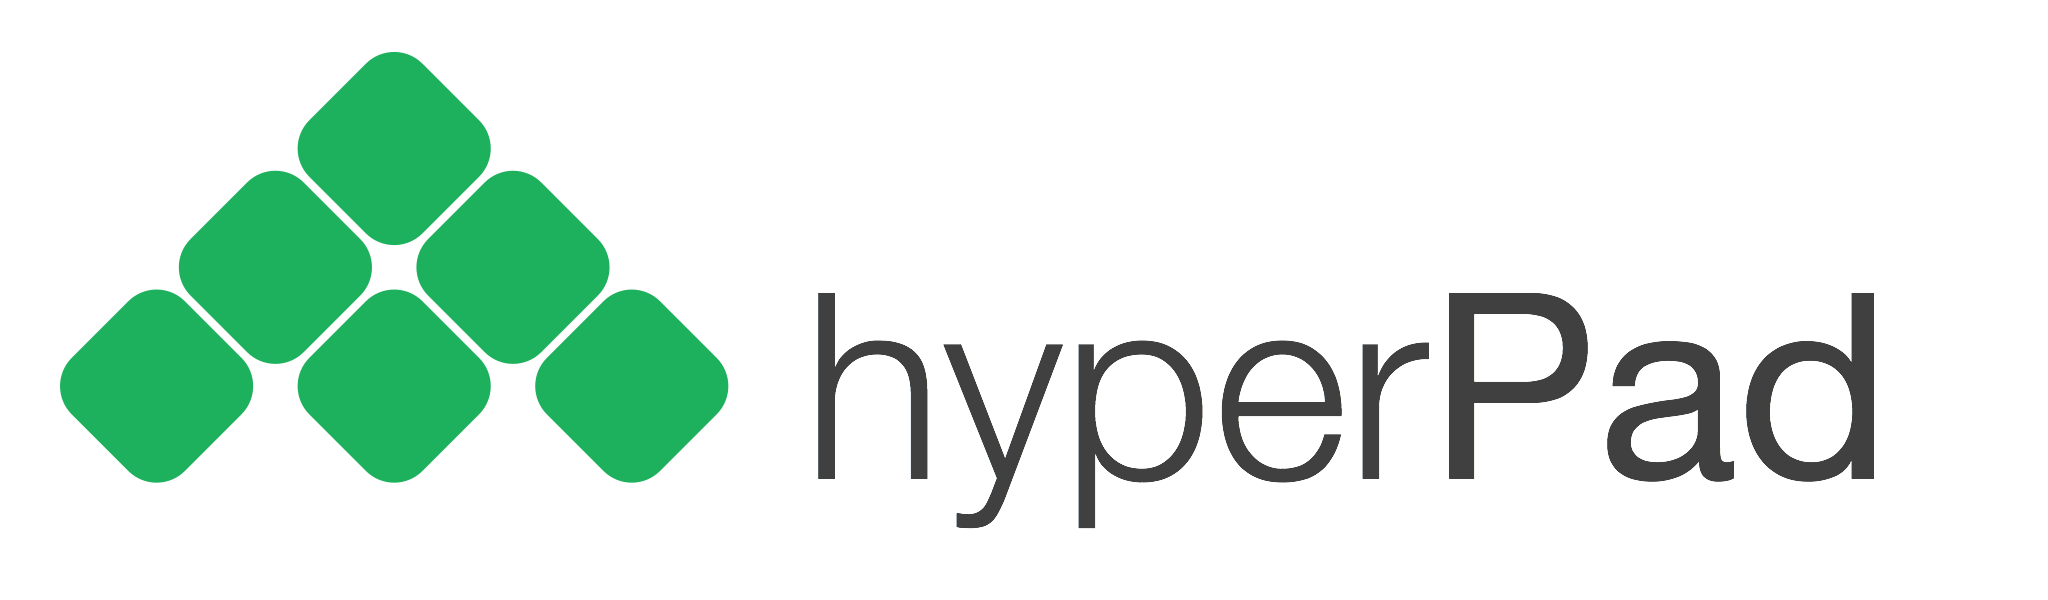 hyperPad